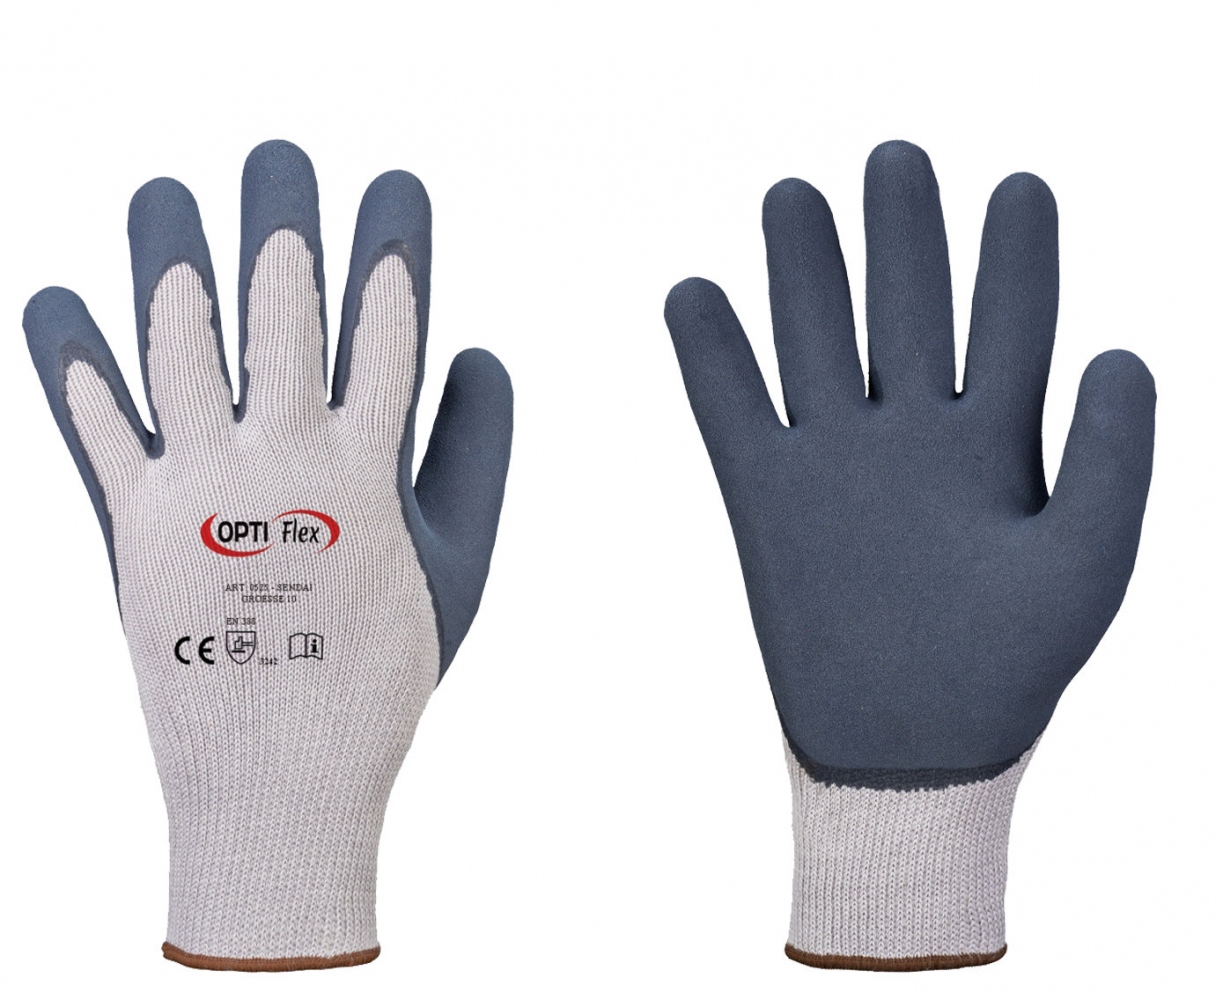 pics/Feldtmann 2016/Handschutz/google/optiflex-0525-sendai-protective-gloves-latex-coated-polyester-cotton2.jpg